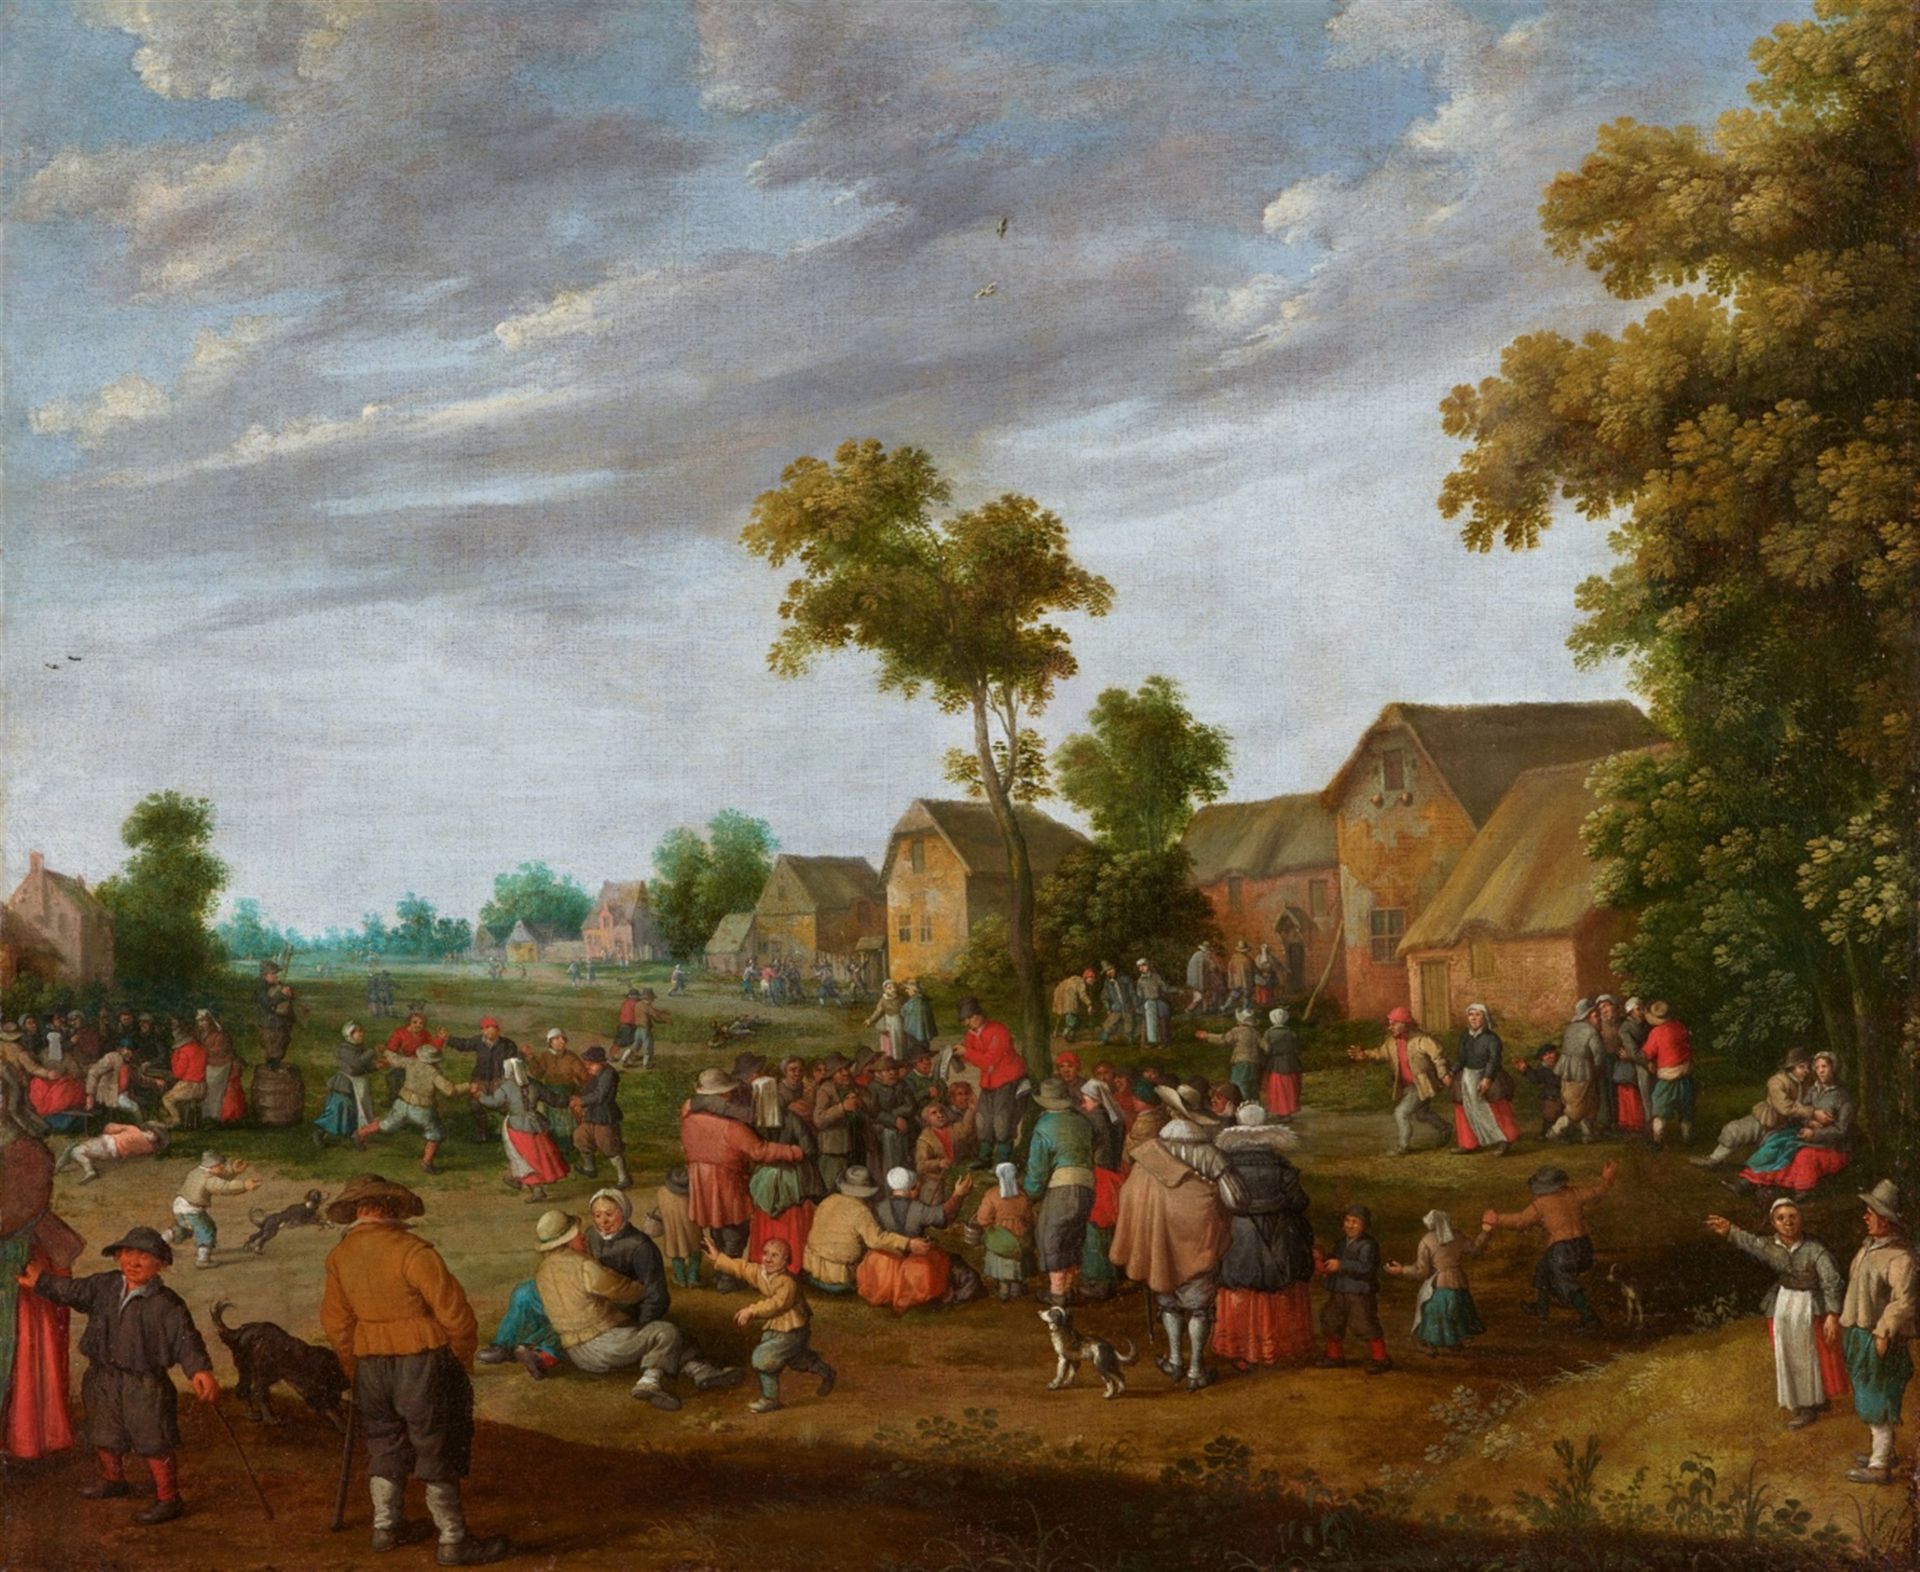 Joost Cornelisz. Droochsloot, Village Landscape with Peasant Festivities